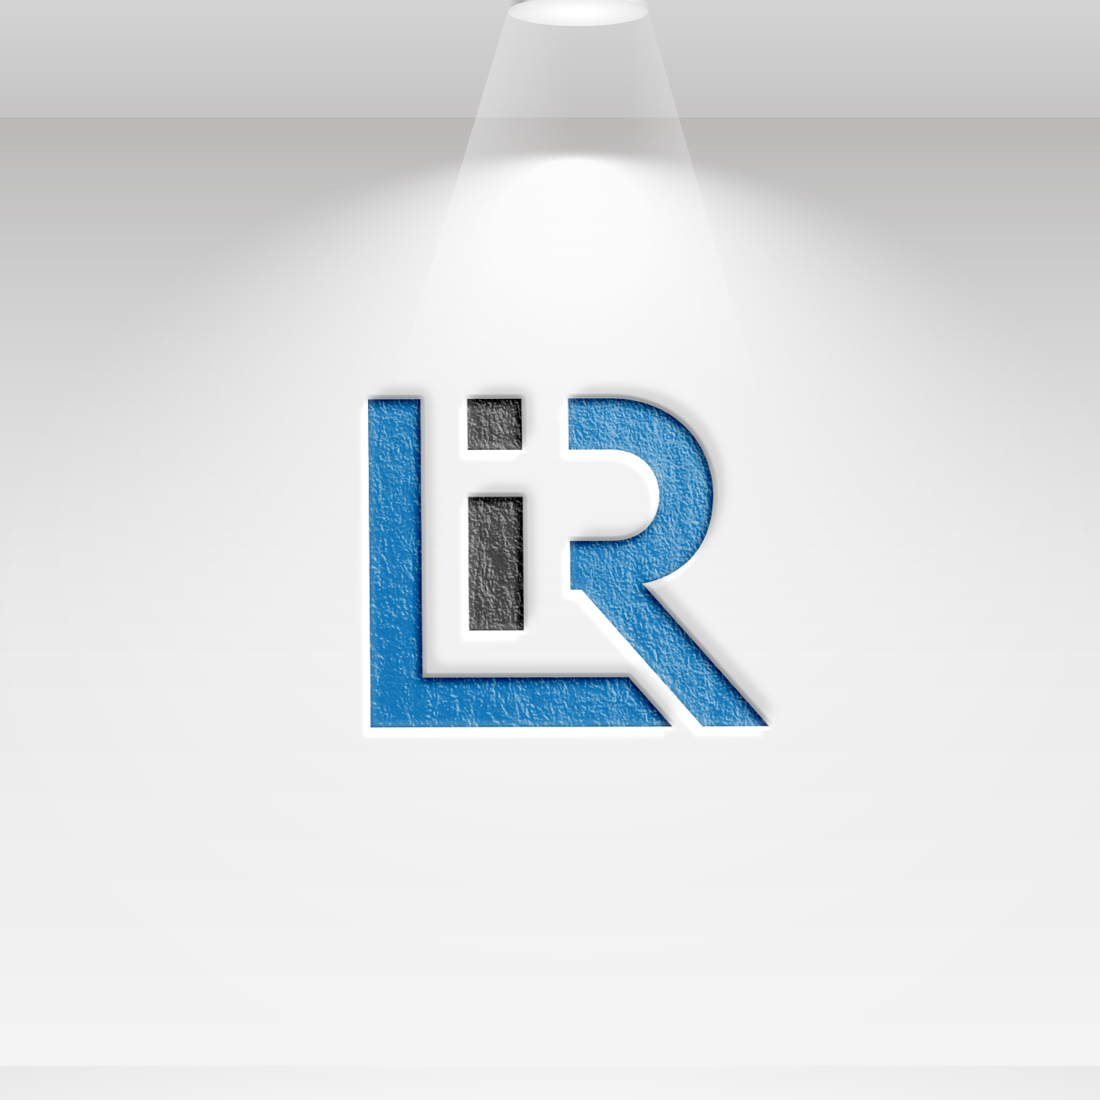 LiR logo design preview image.